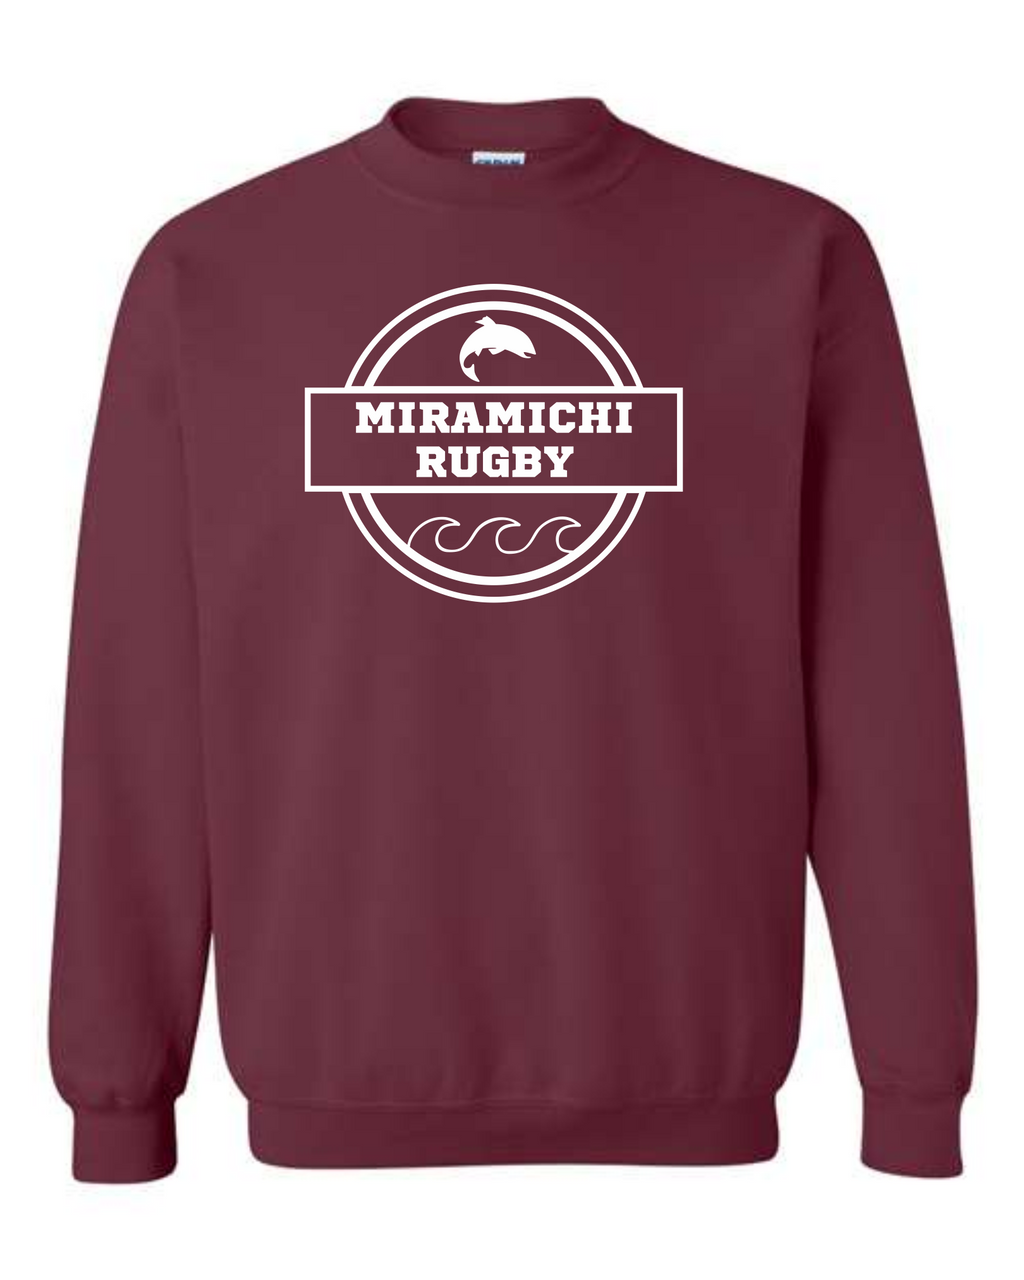 Miramichi Rugby - Maroon - Sweatshirt